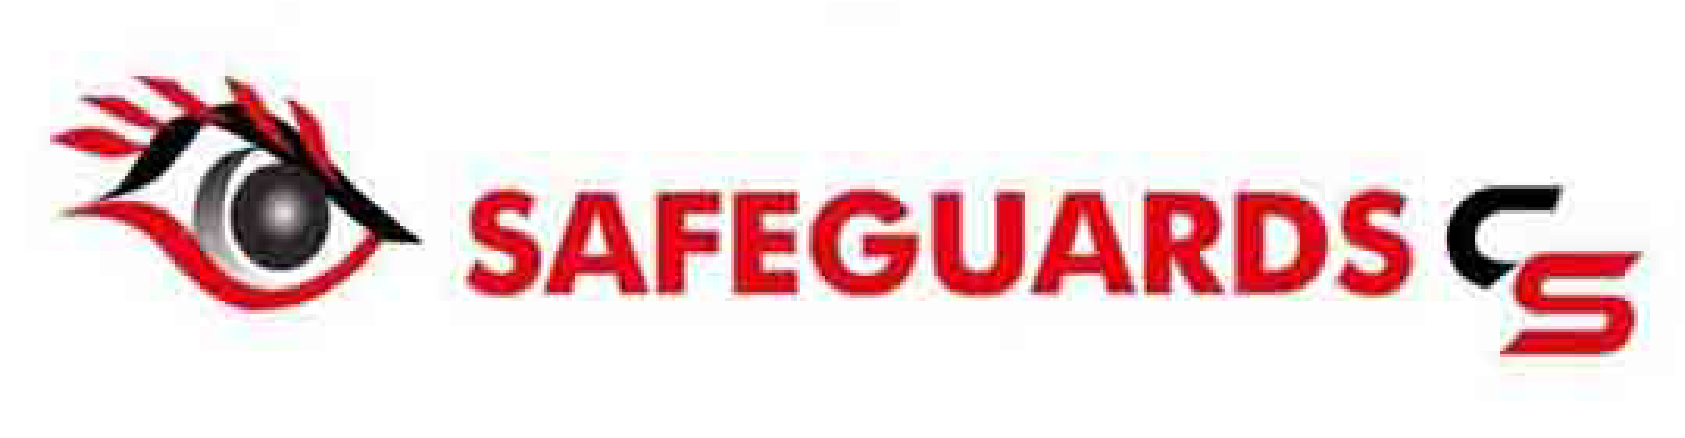 Safeguards logo